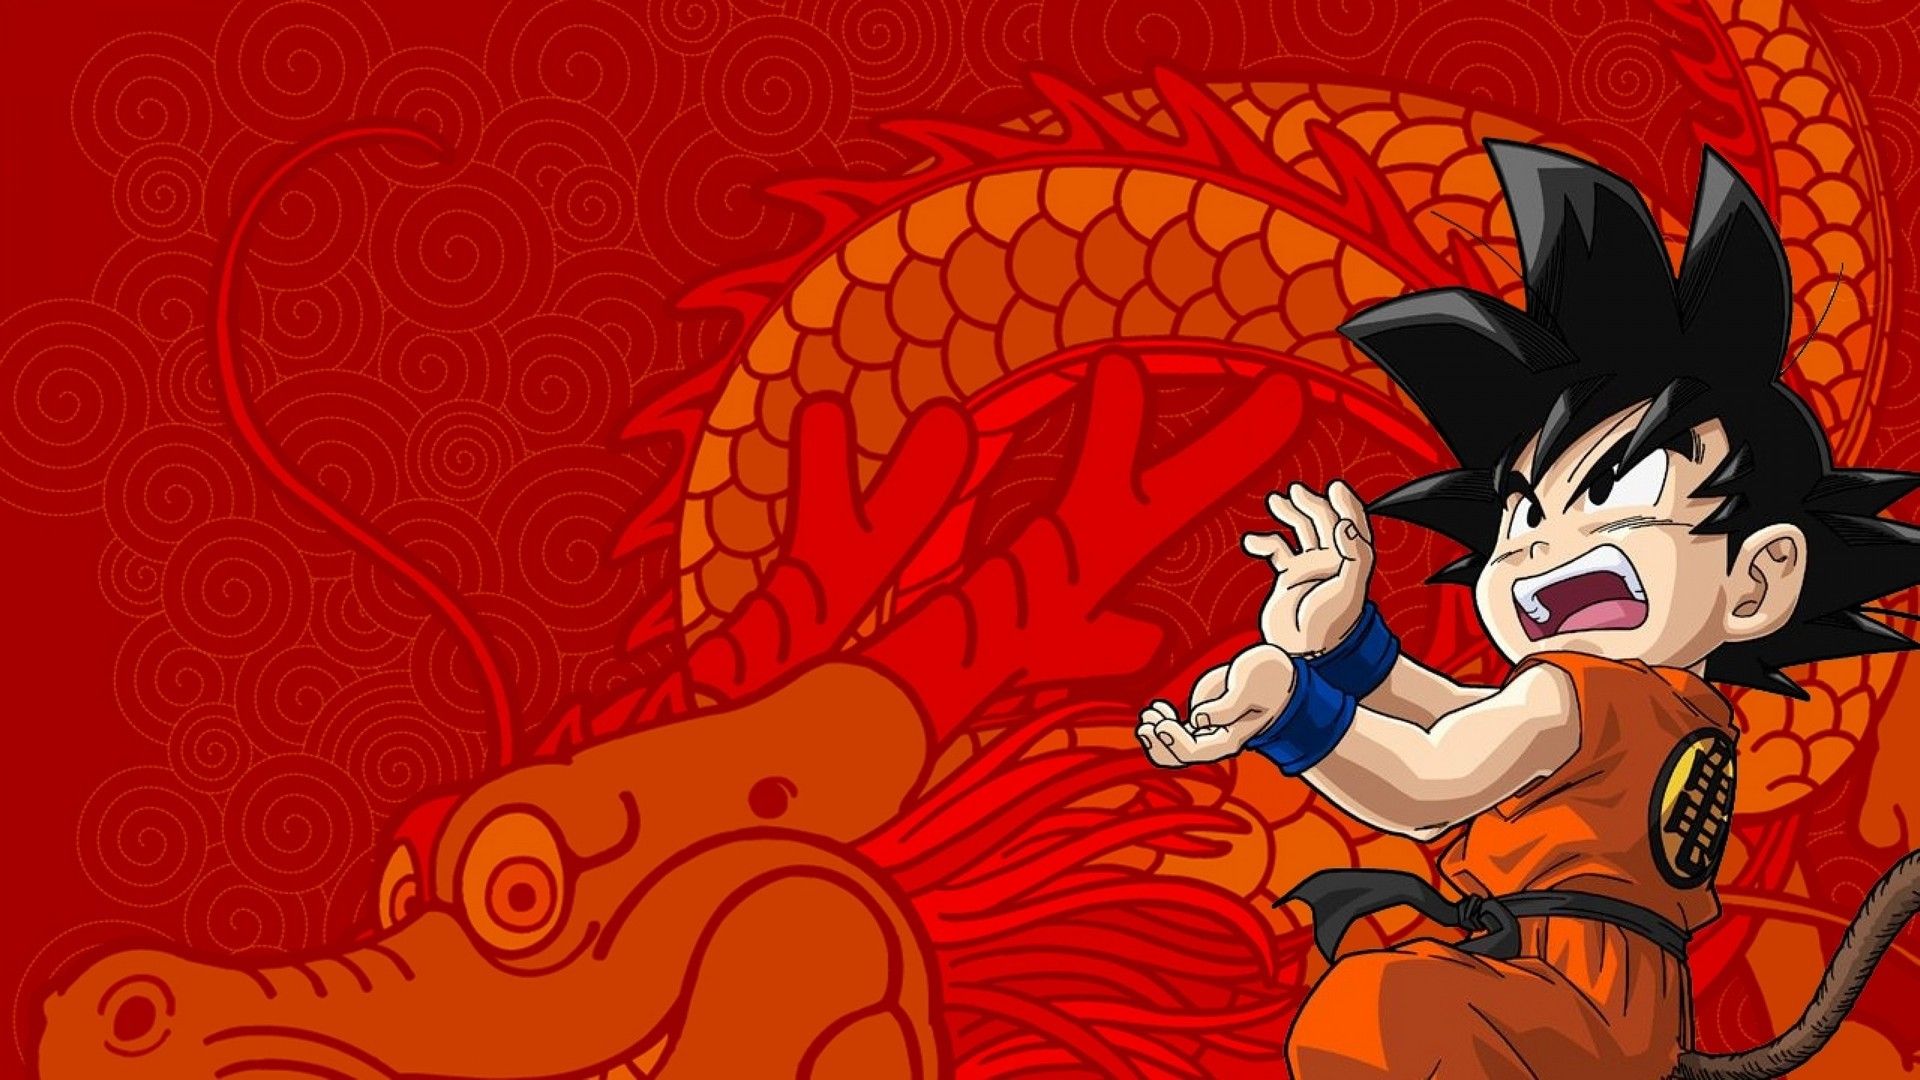 18+] Kid Goku PC Wallpapers - WallpaperSafari